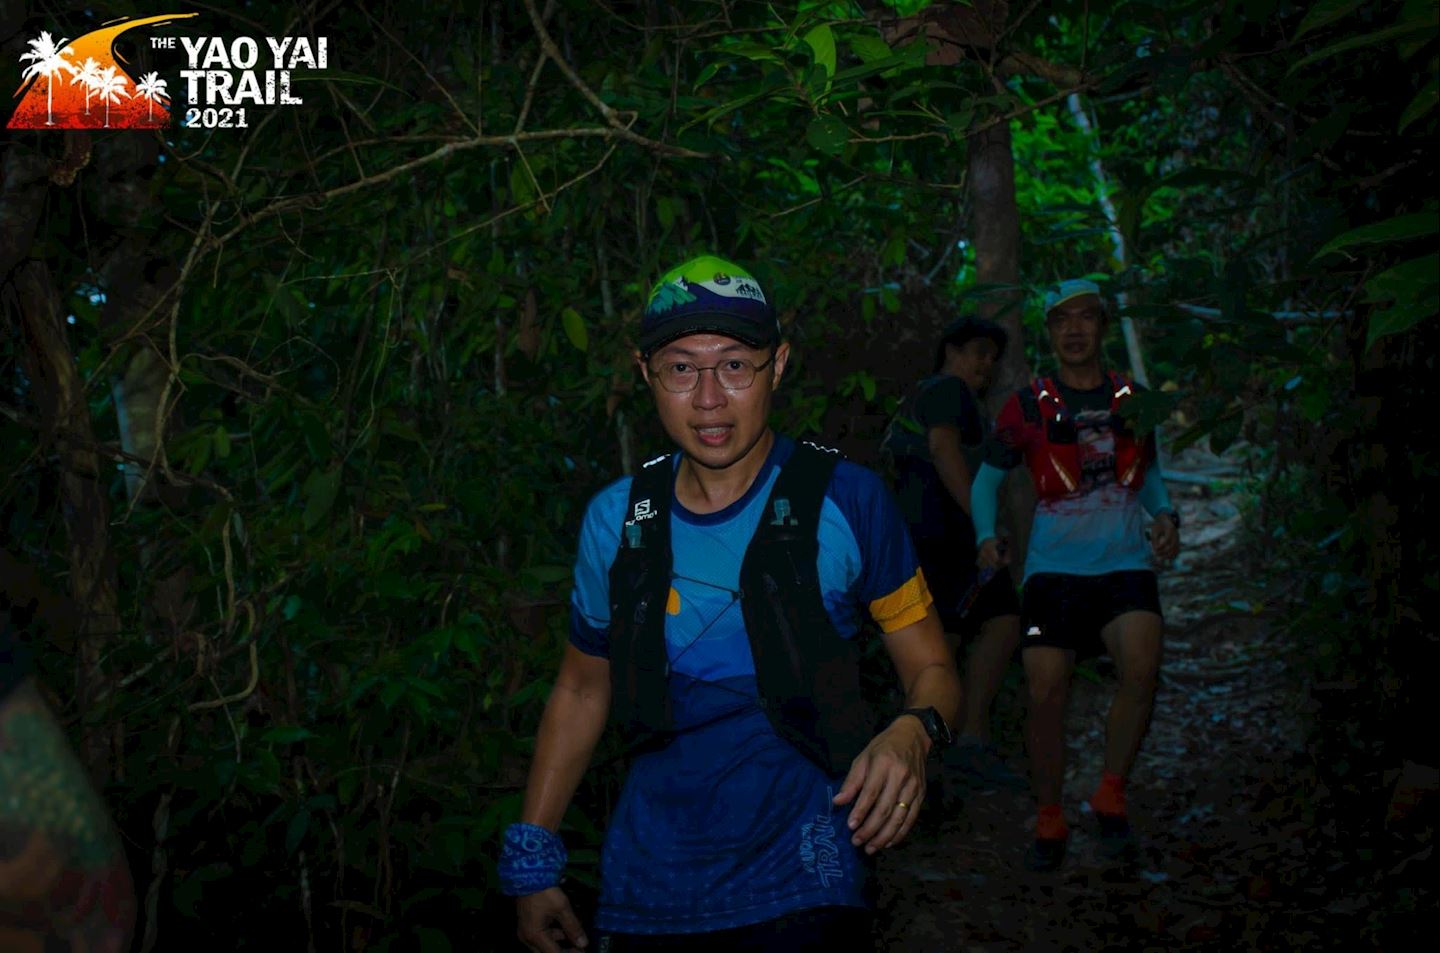 yao yai trail